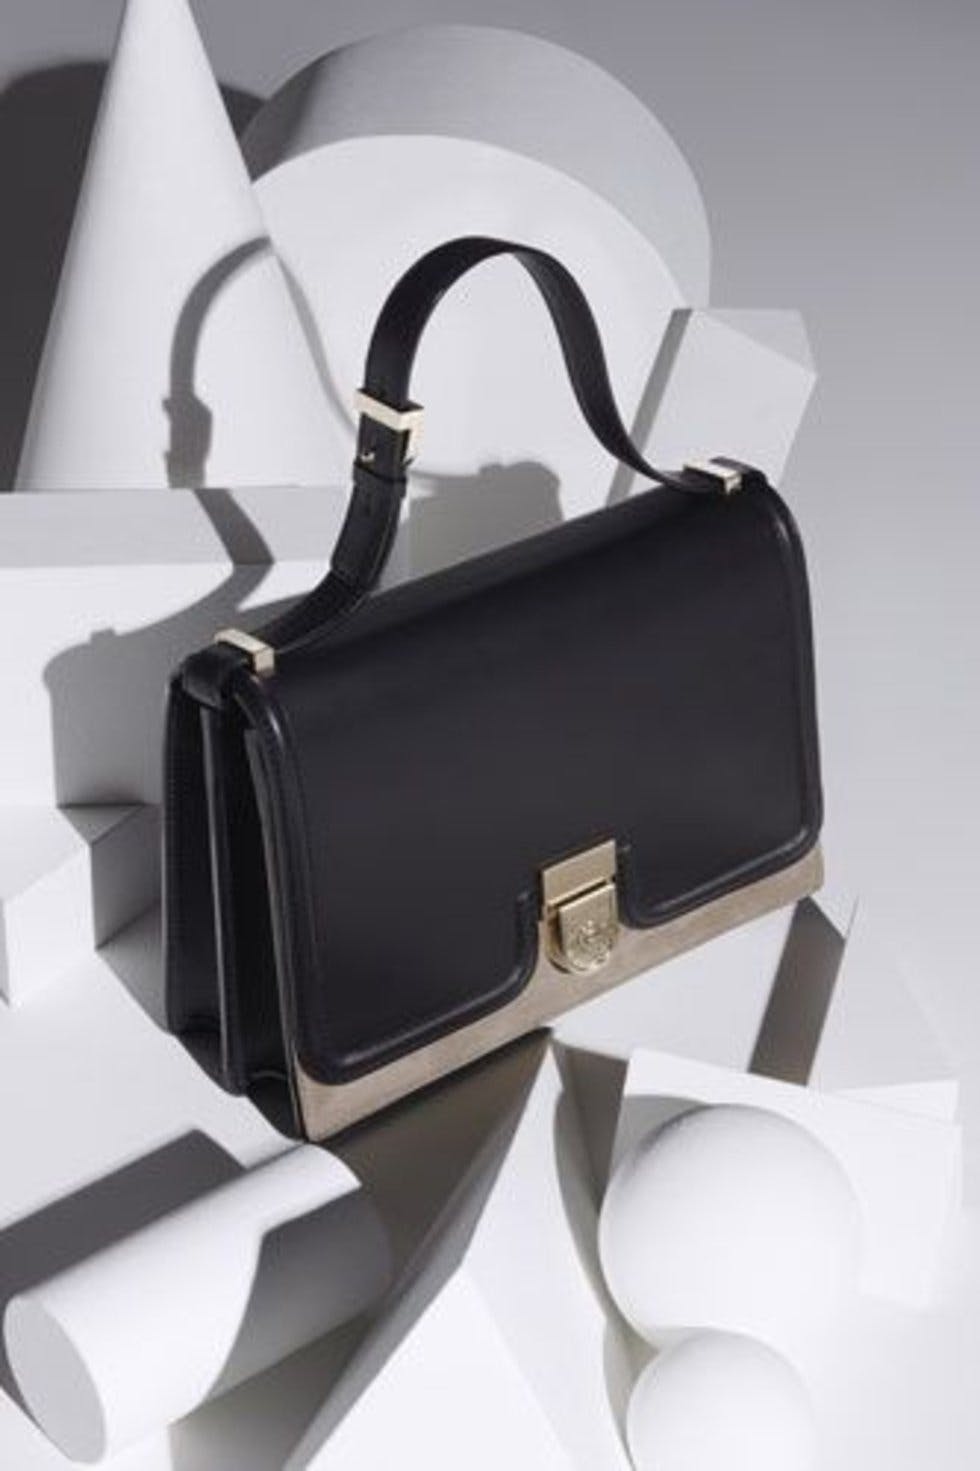 Victoria Beckham's handbag range launches